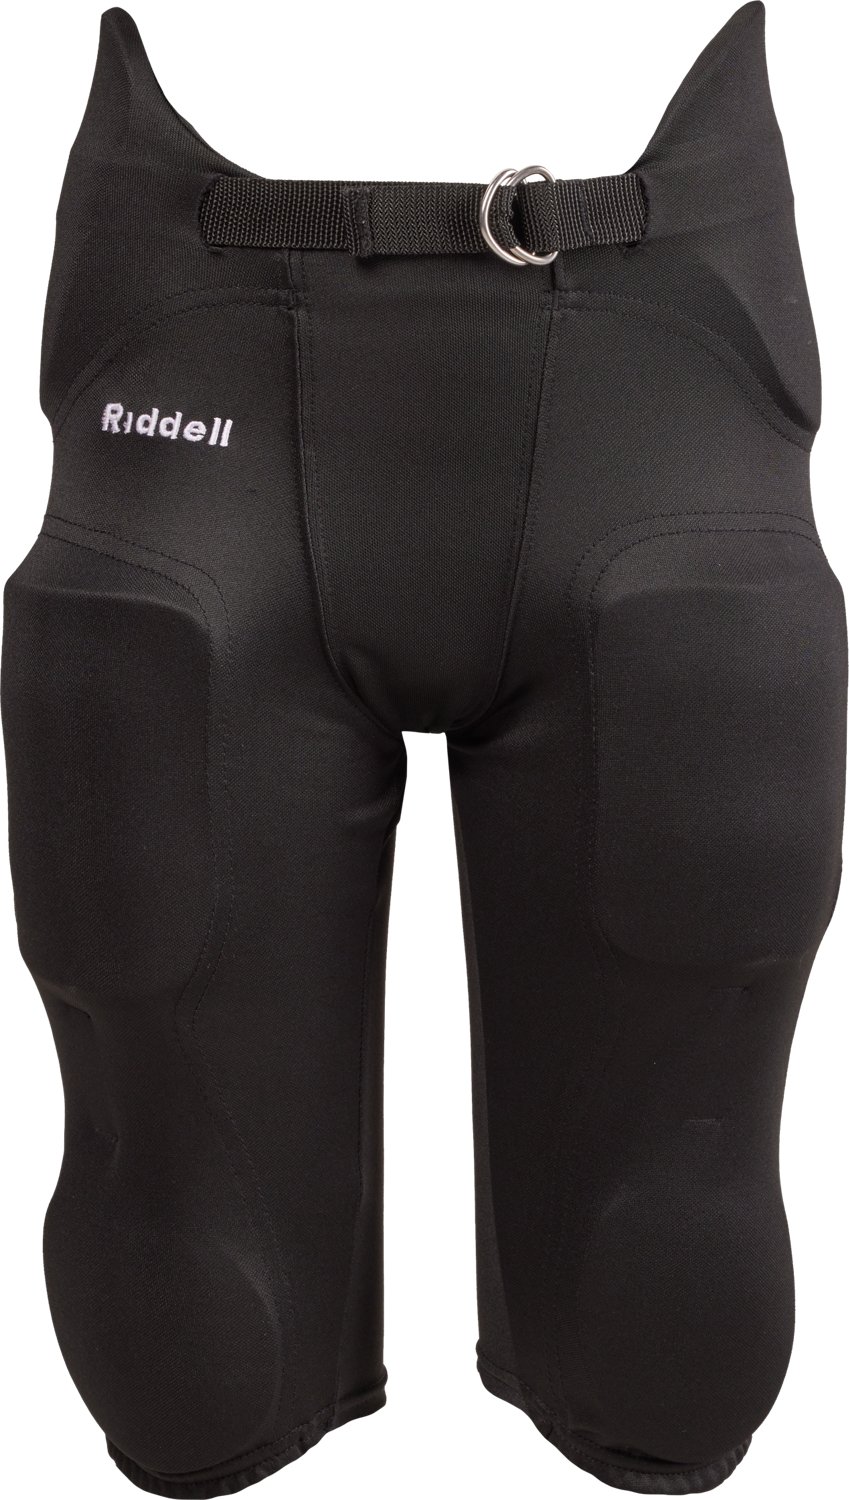 Riddell Men's Fully Integrated Football Pants